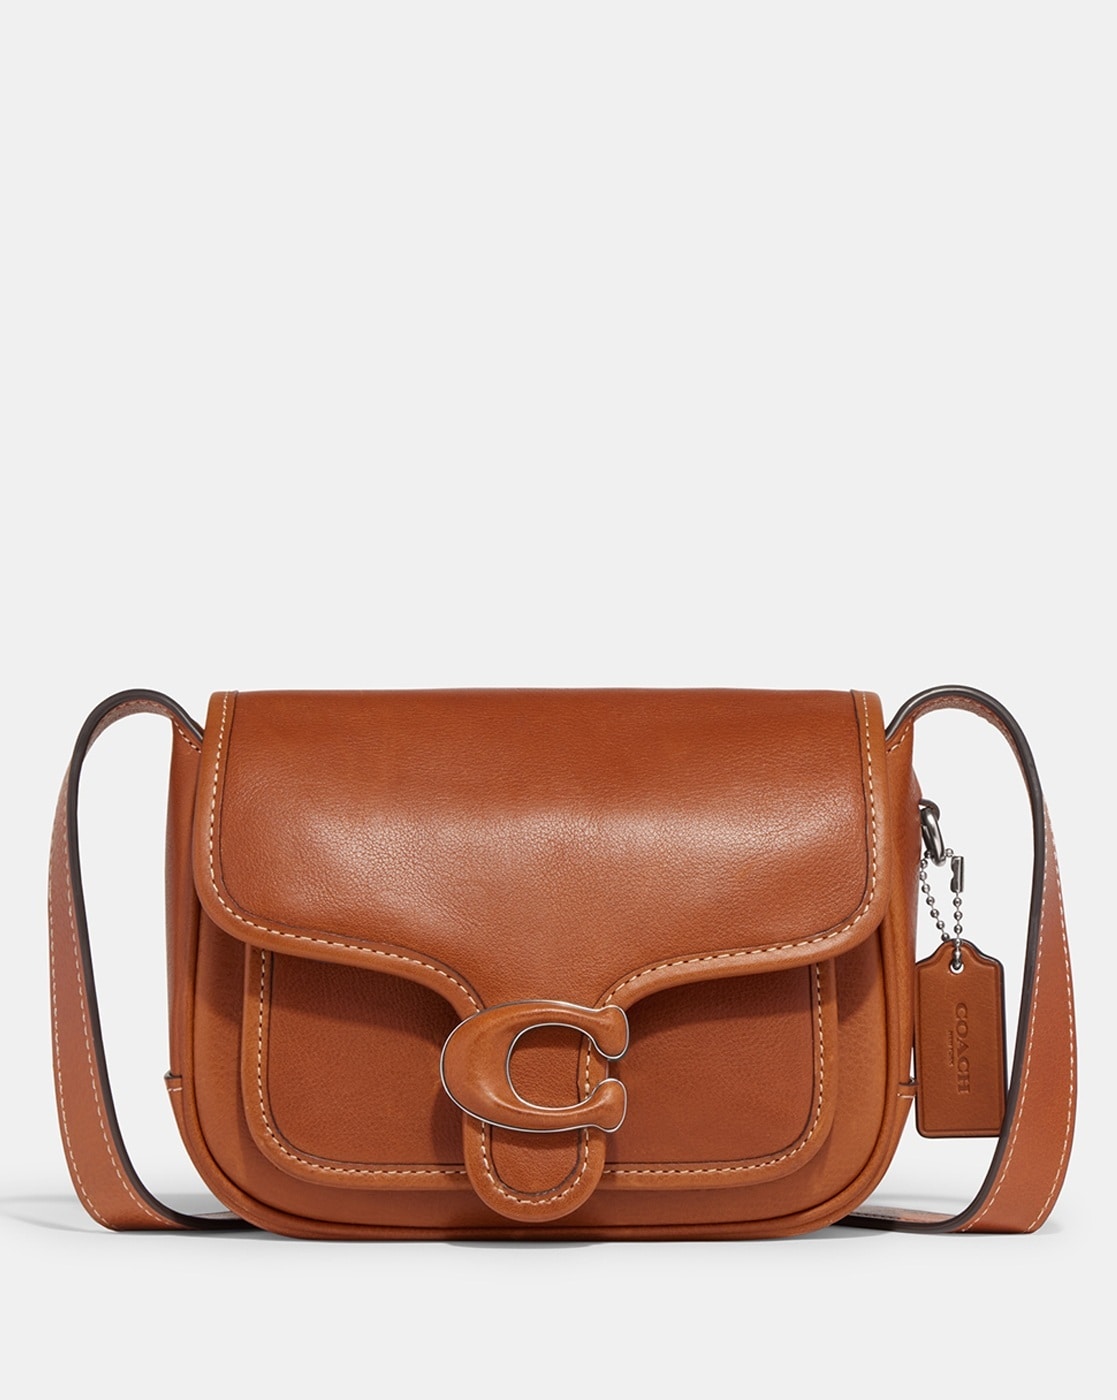 Buy Coach Sling Bag For Women - Sales & Deals @ ZALORA SG